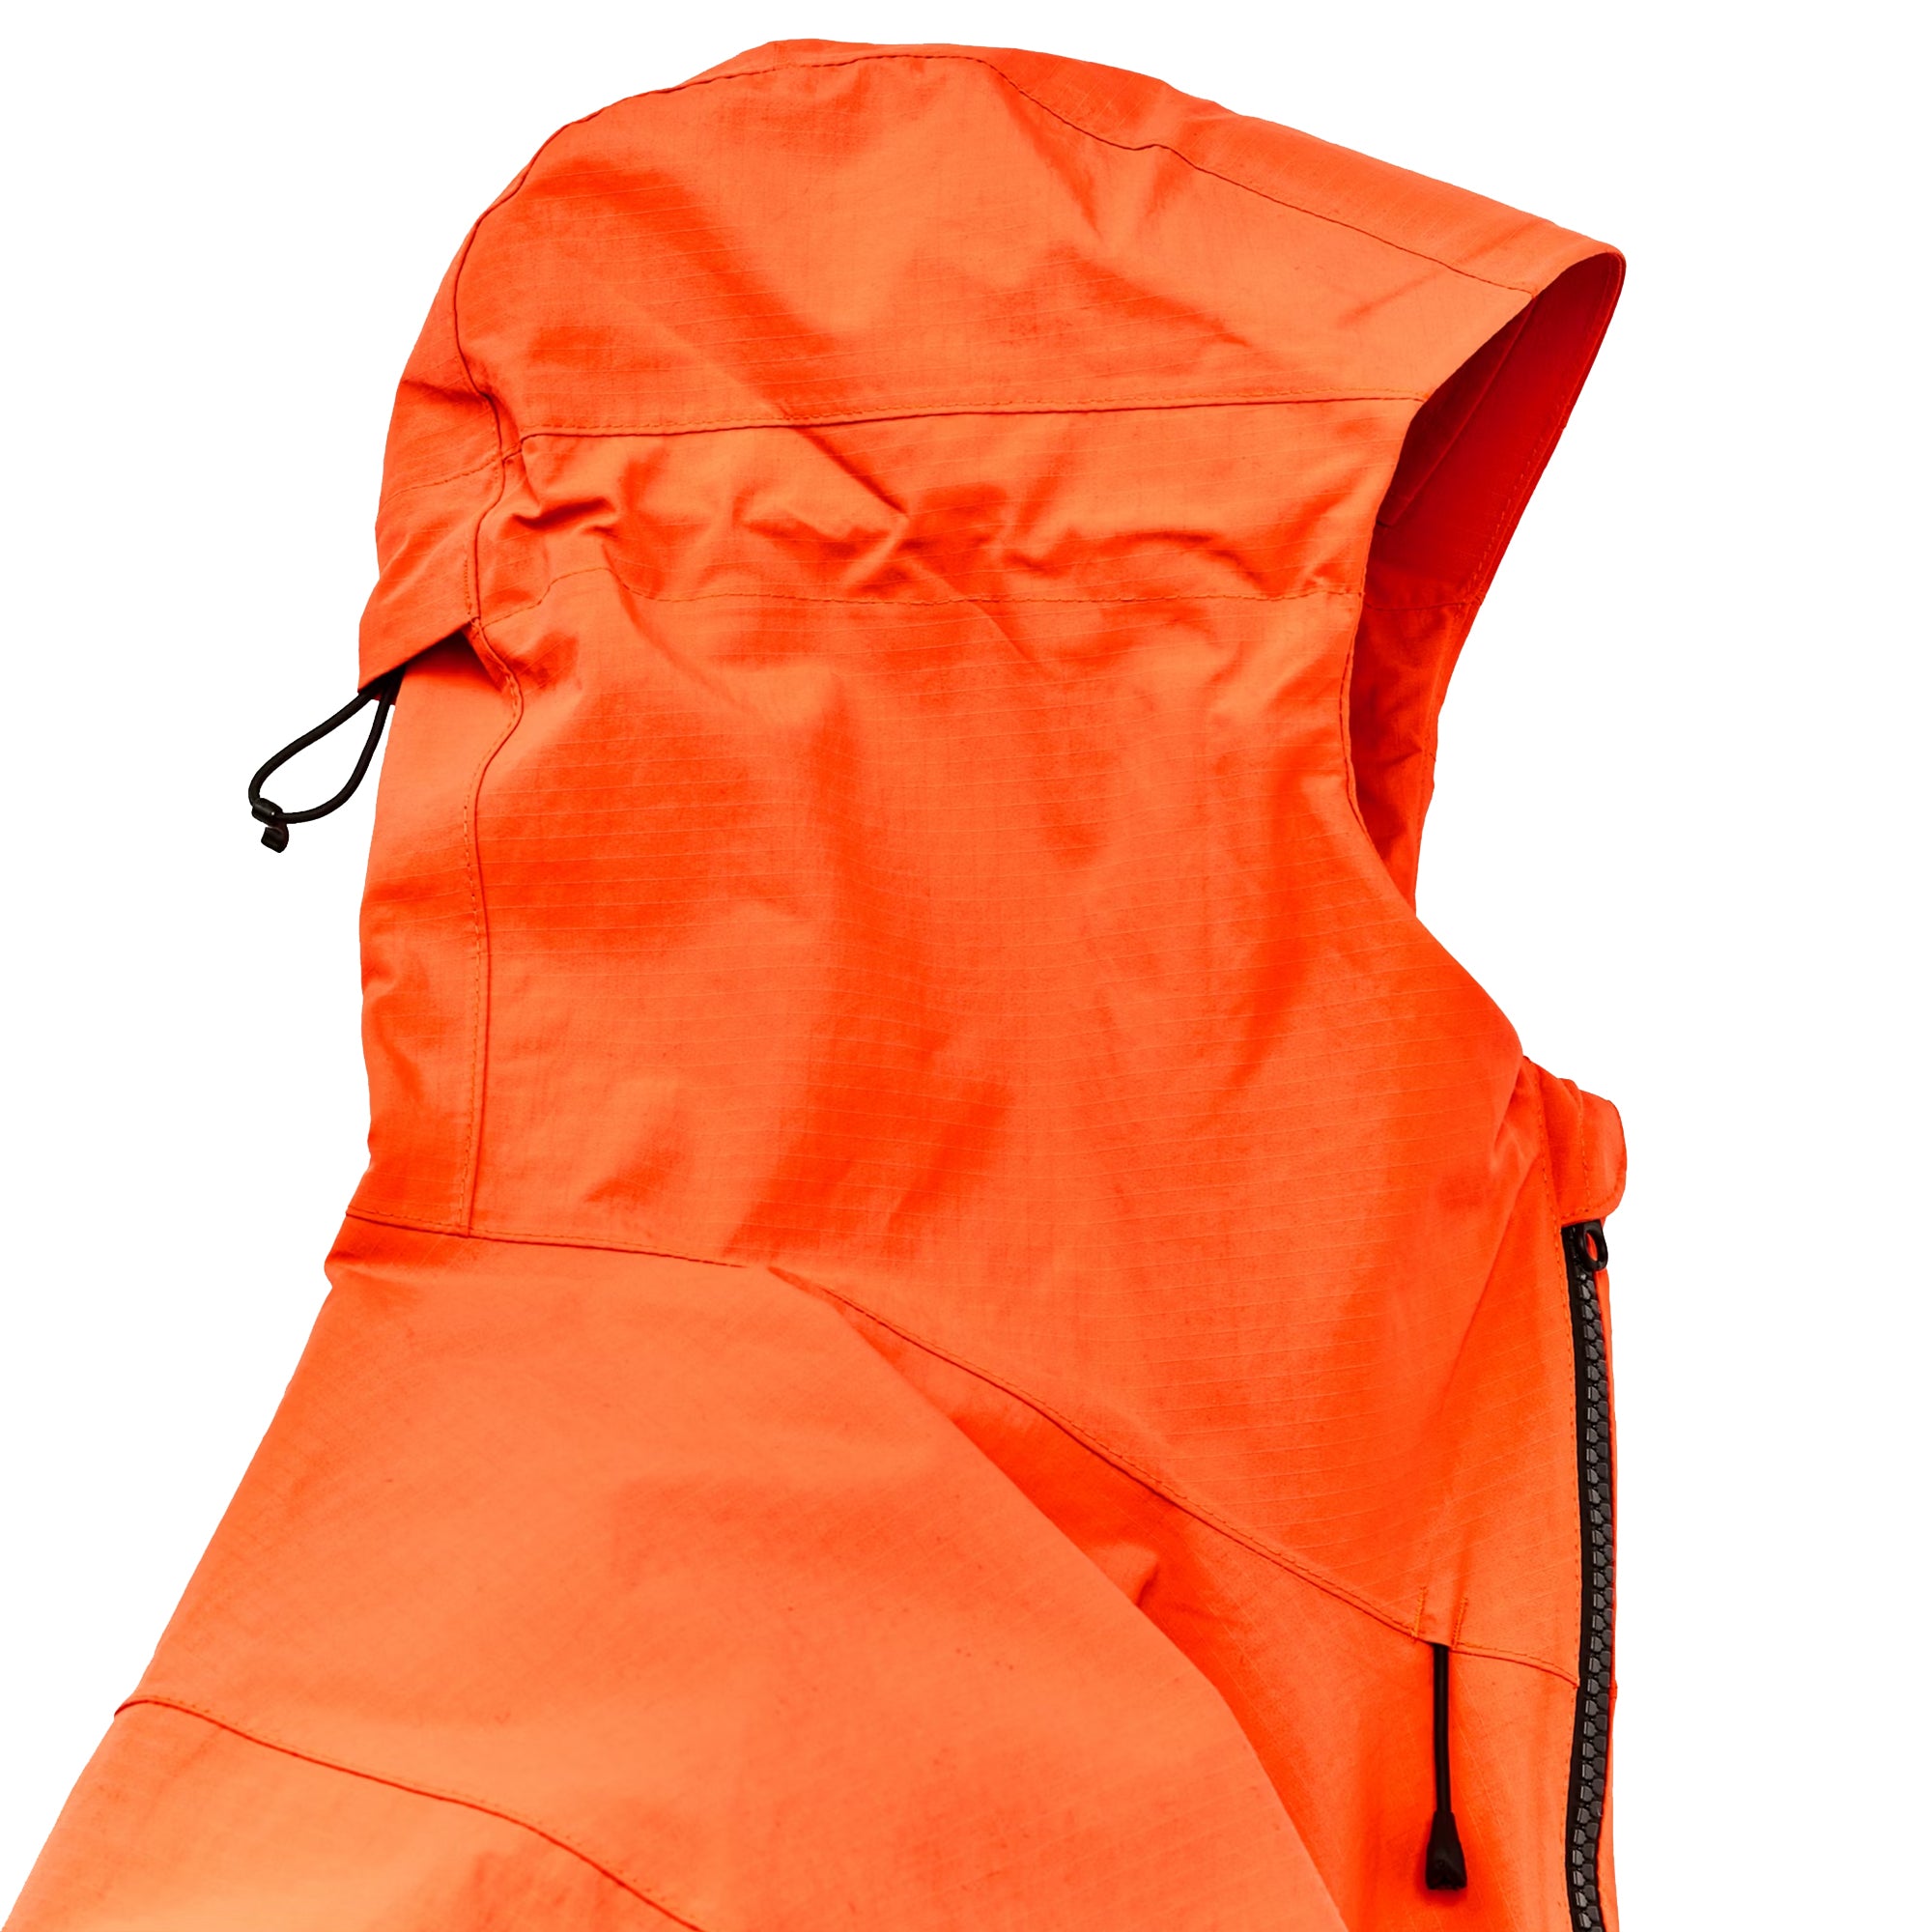 Filson New Swiftwater 2.0 Rain Jacket - Blaze Orange